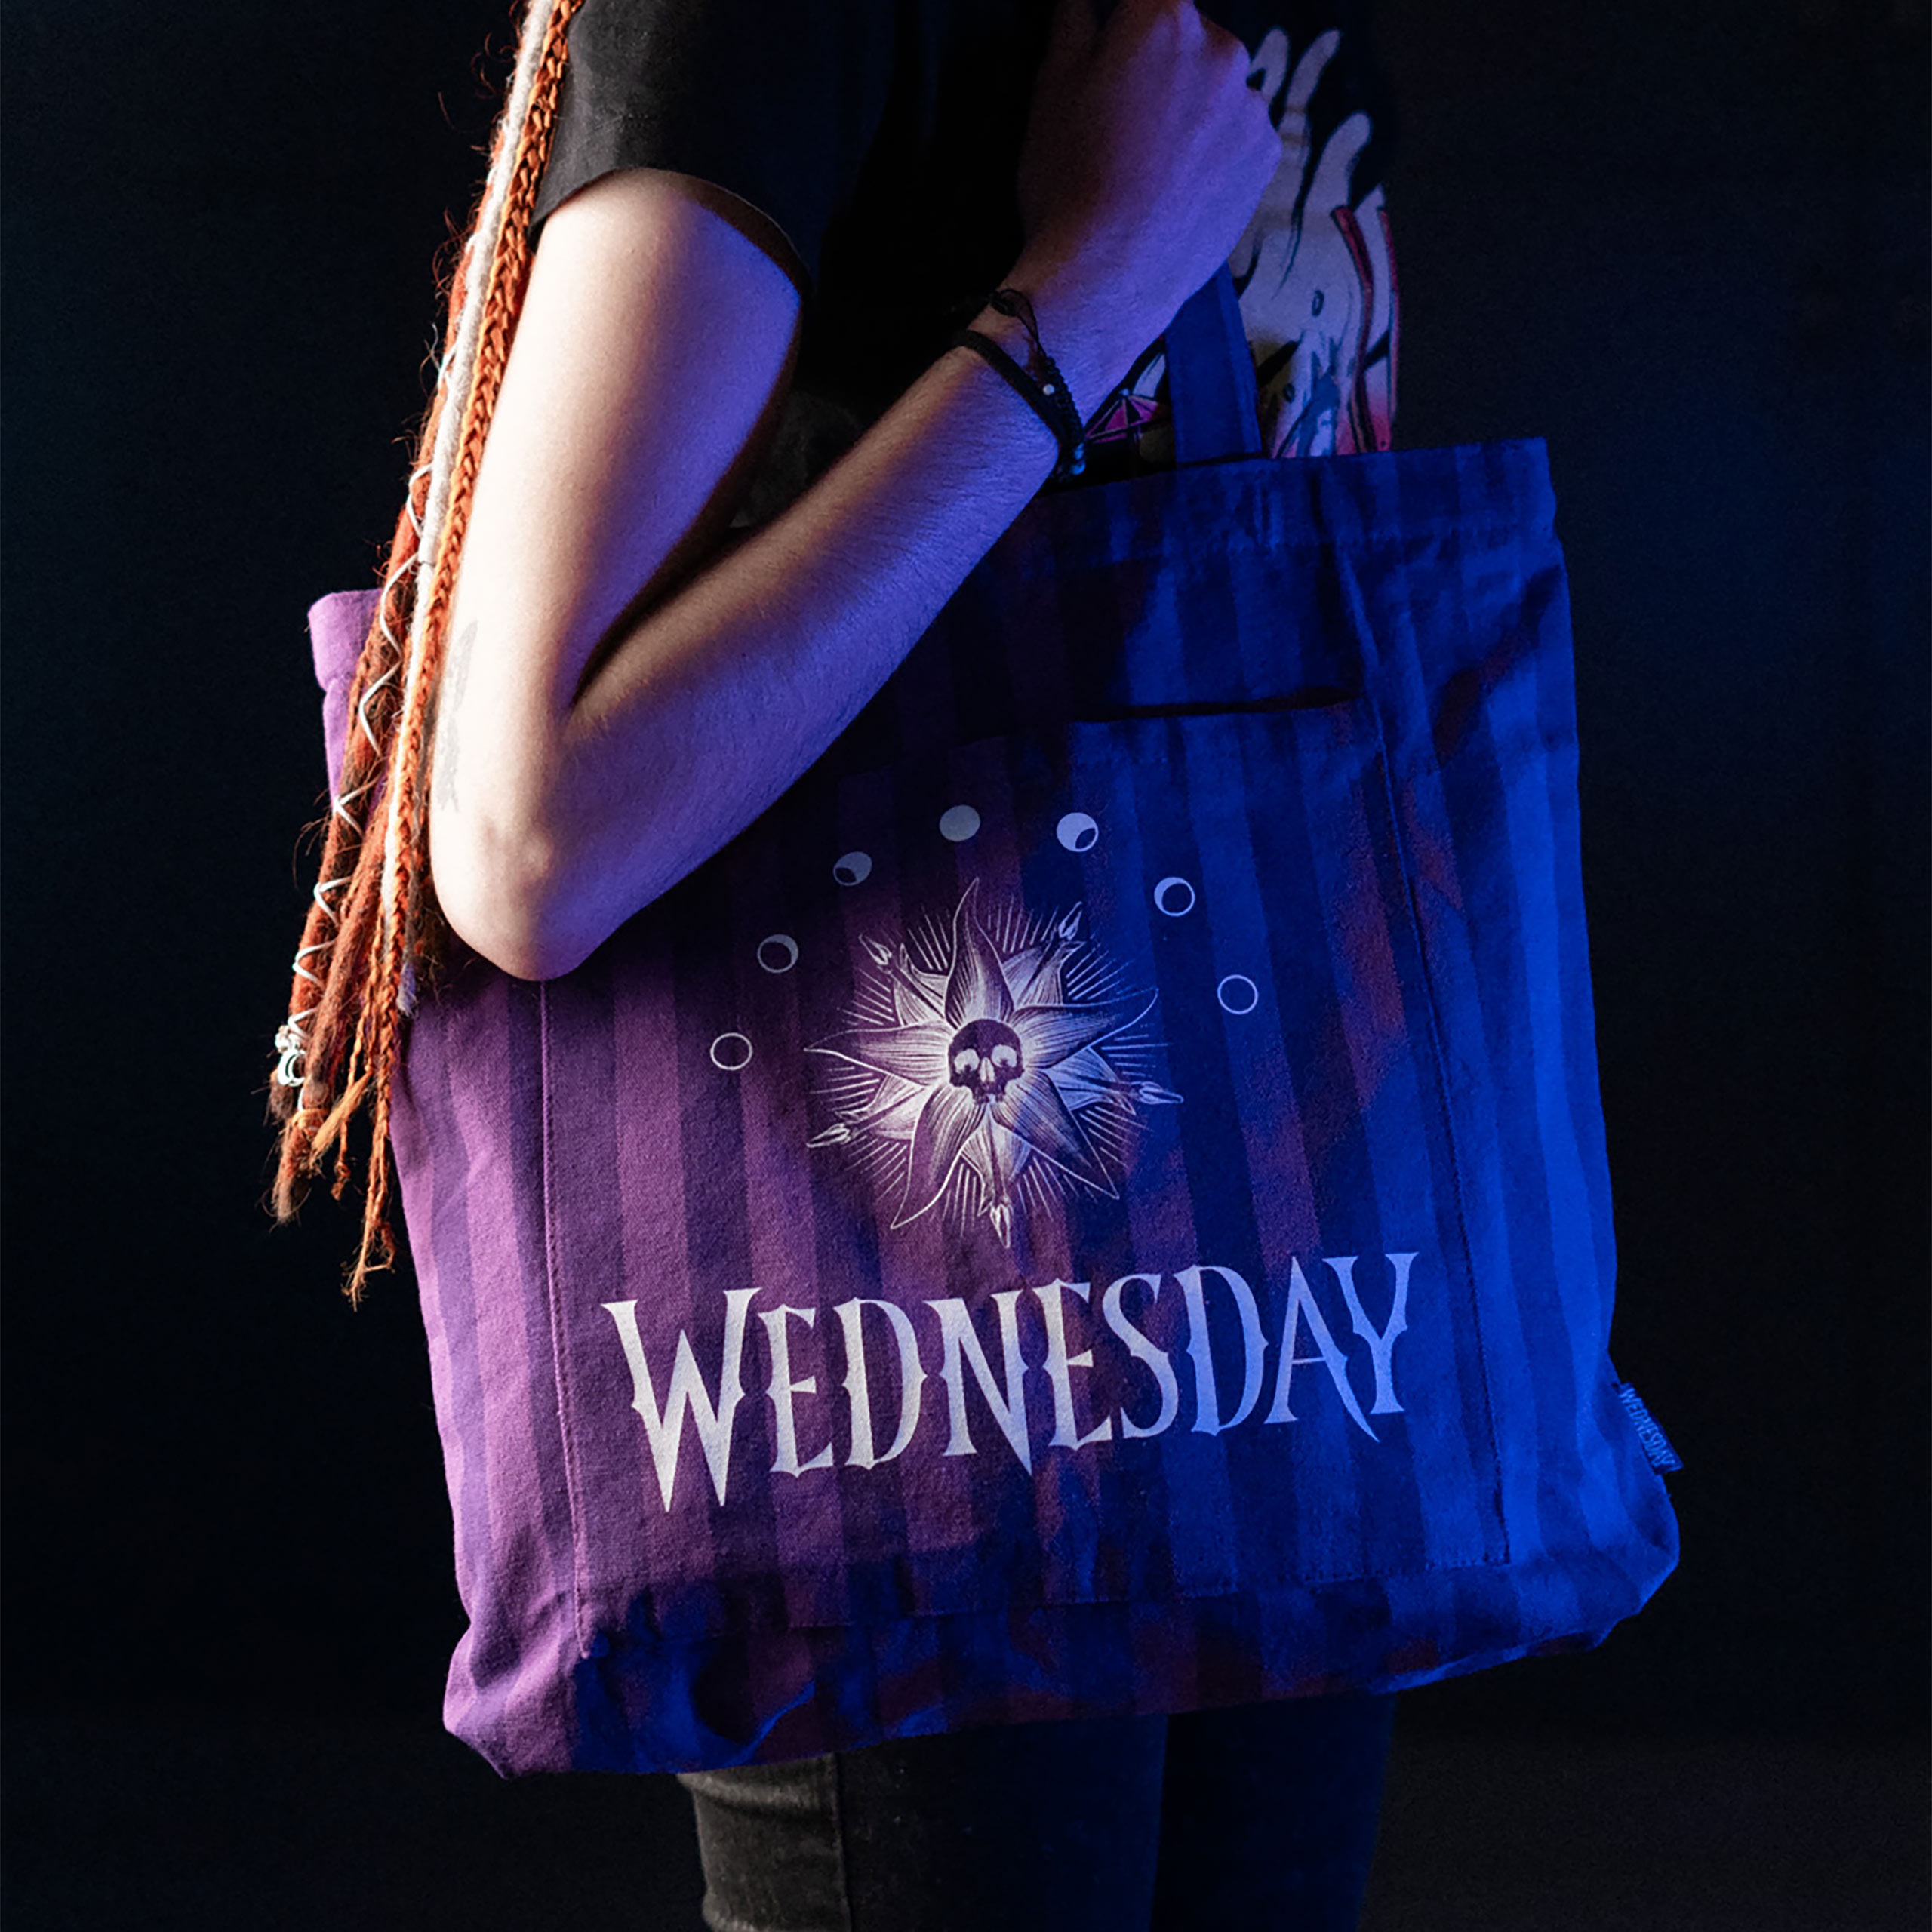 Wednesday - Premium Tote Bag